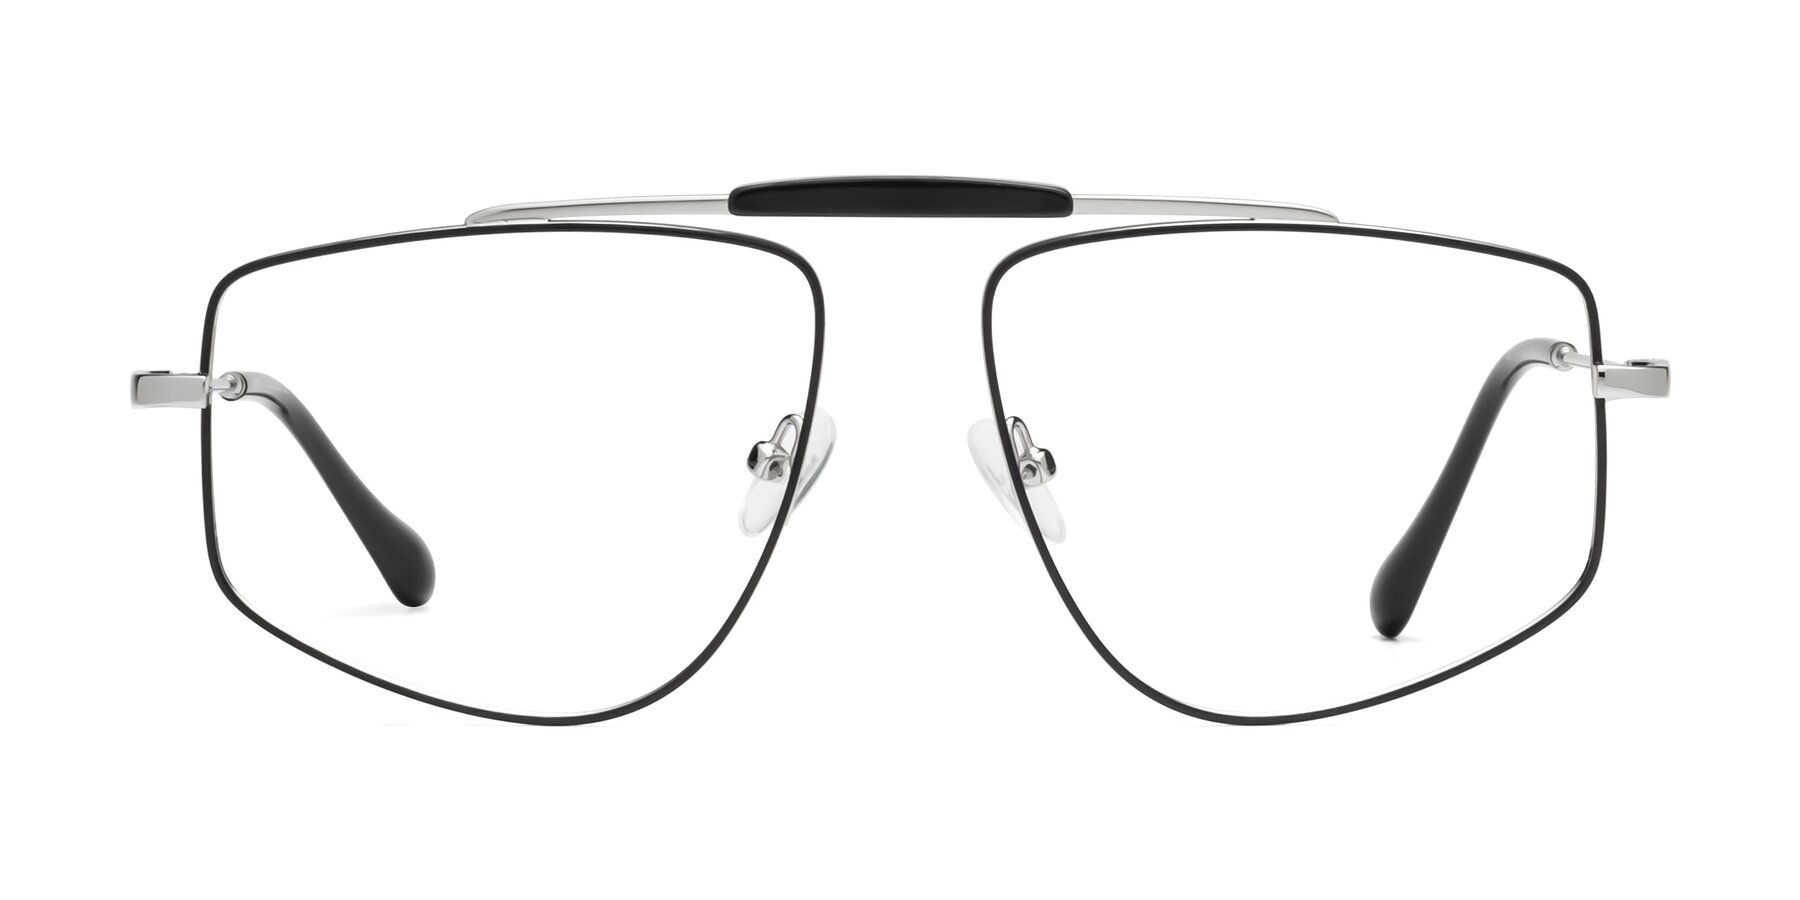 Santini - Black / Silver Sunglasses Frame